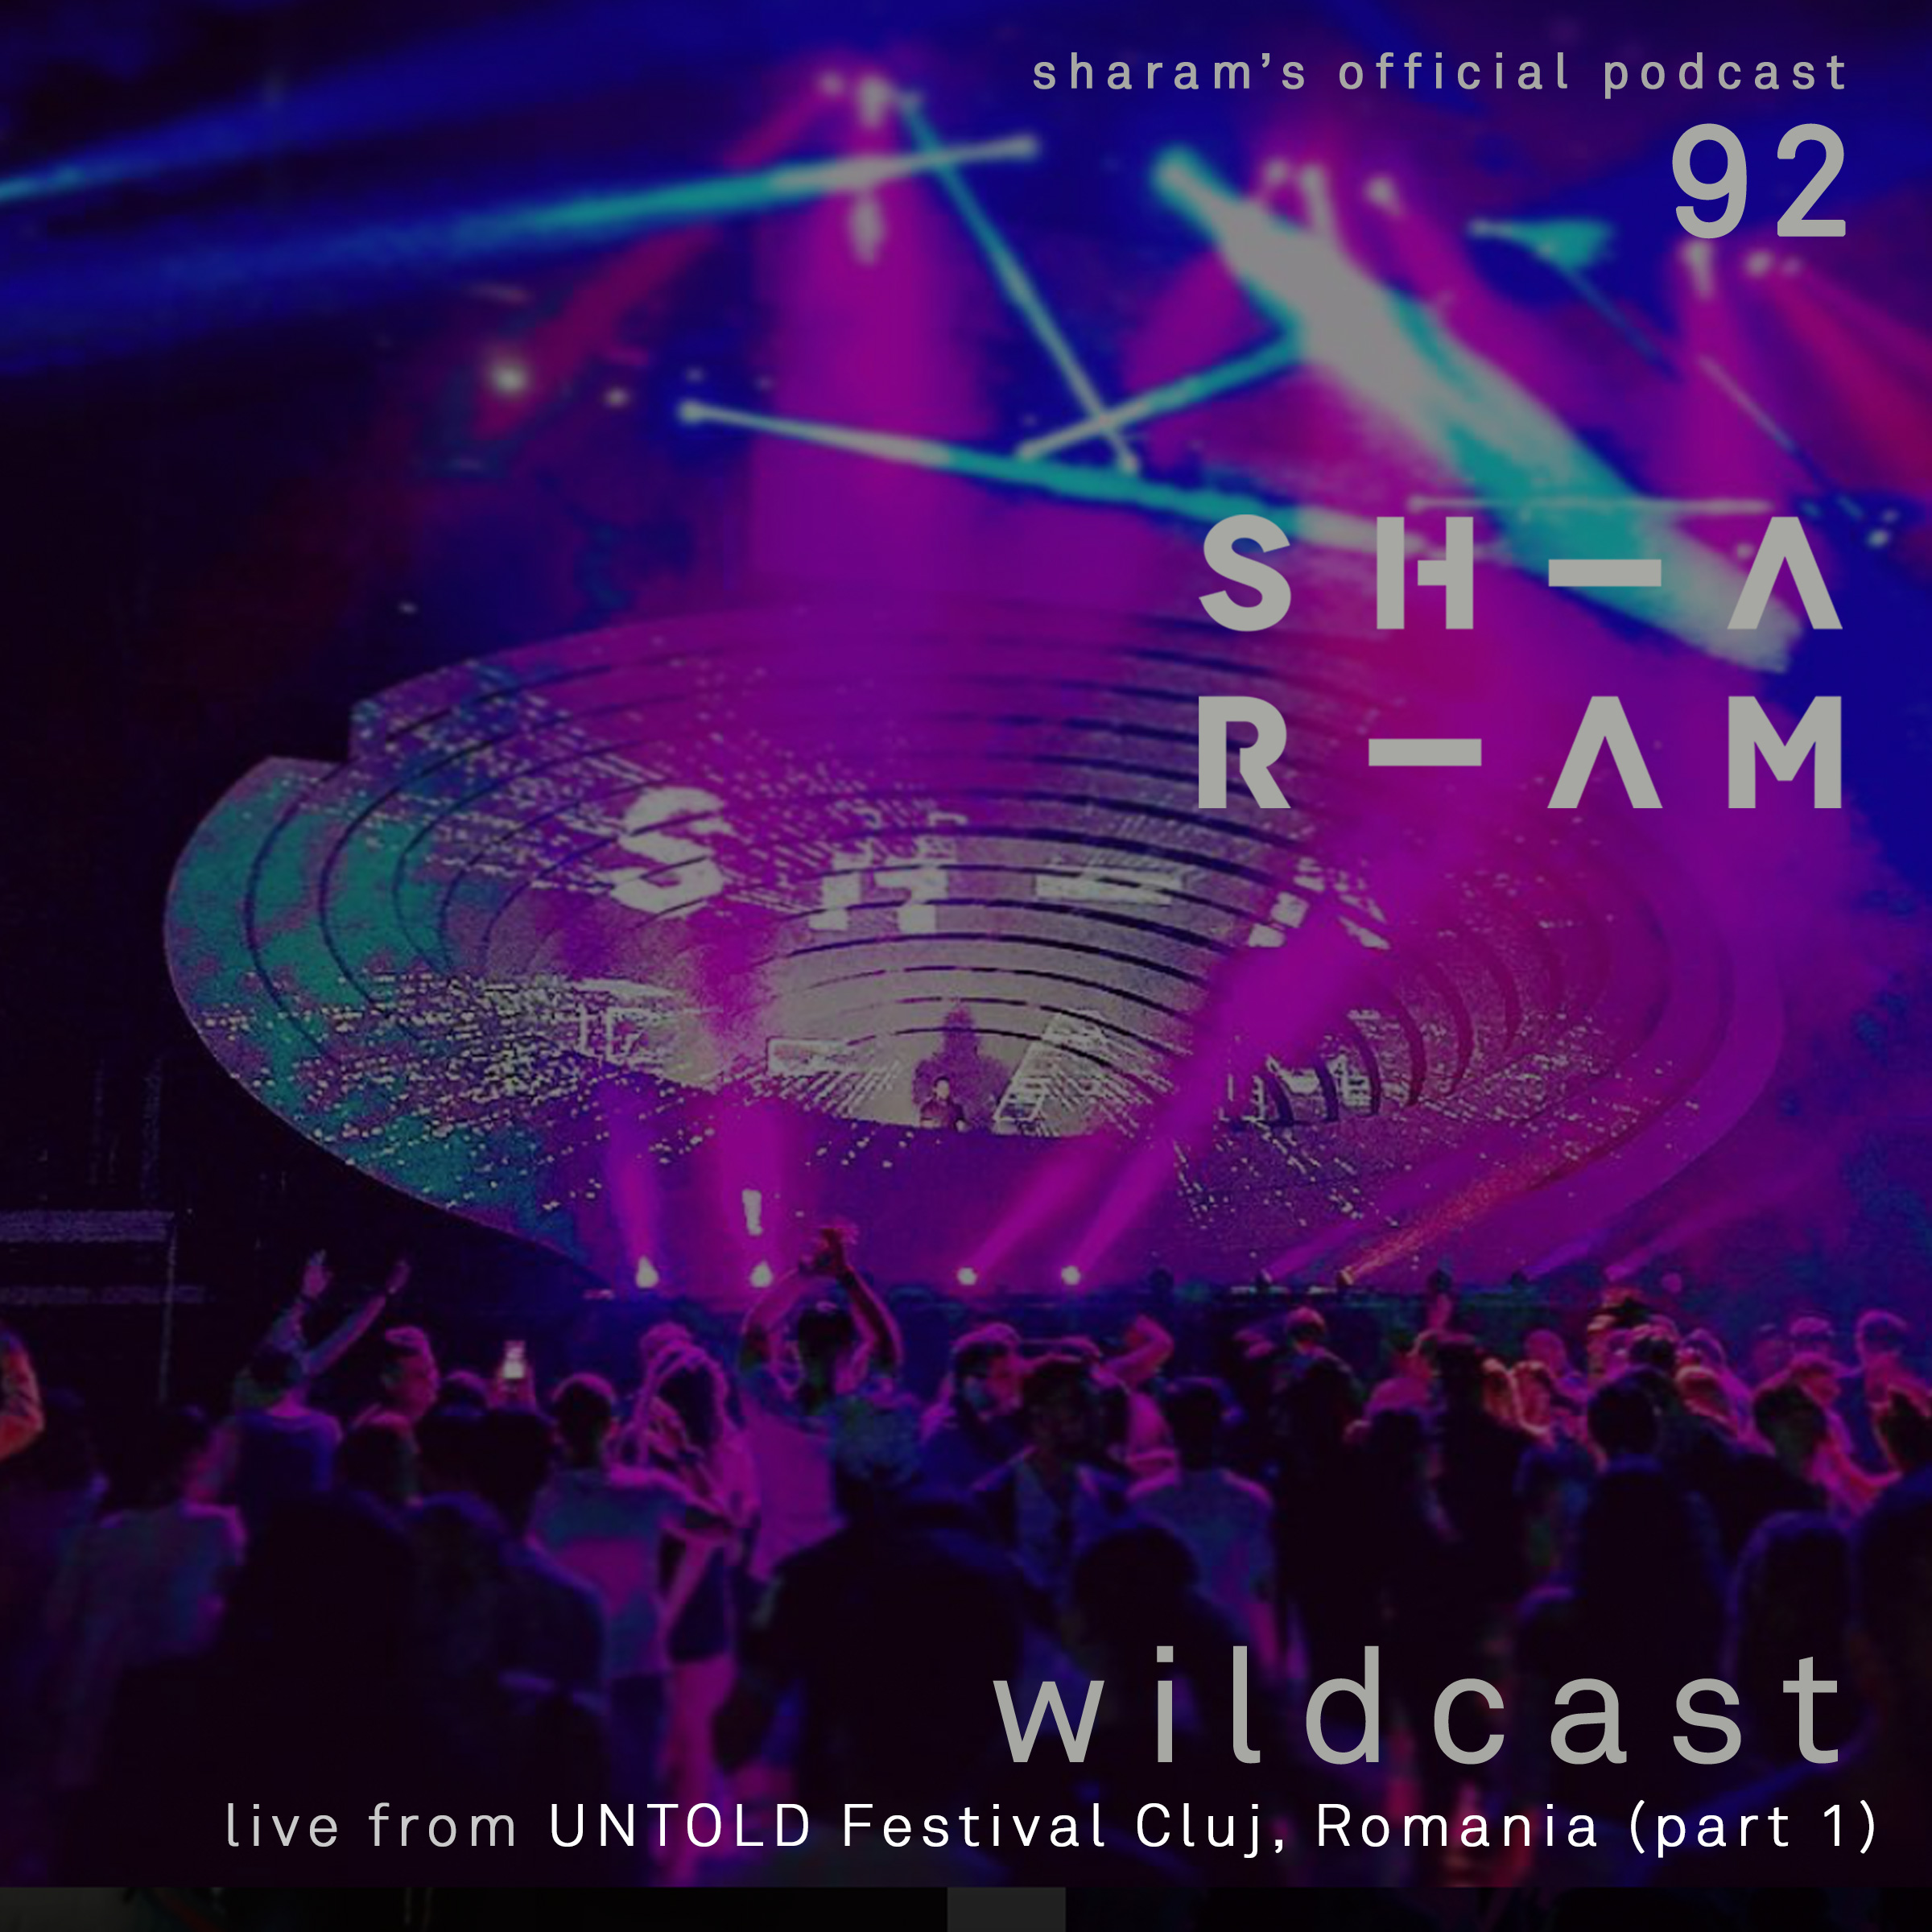 Wildcast 92: Live from Untold Festival, Cluj, Romania